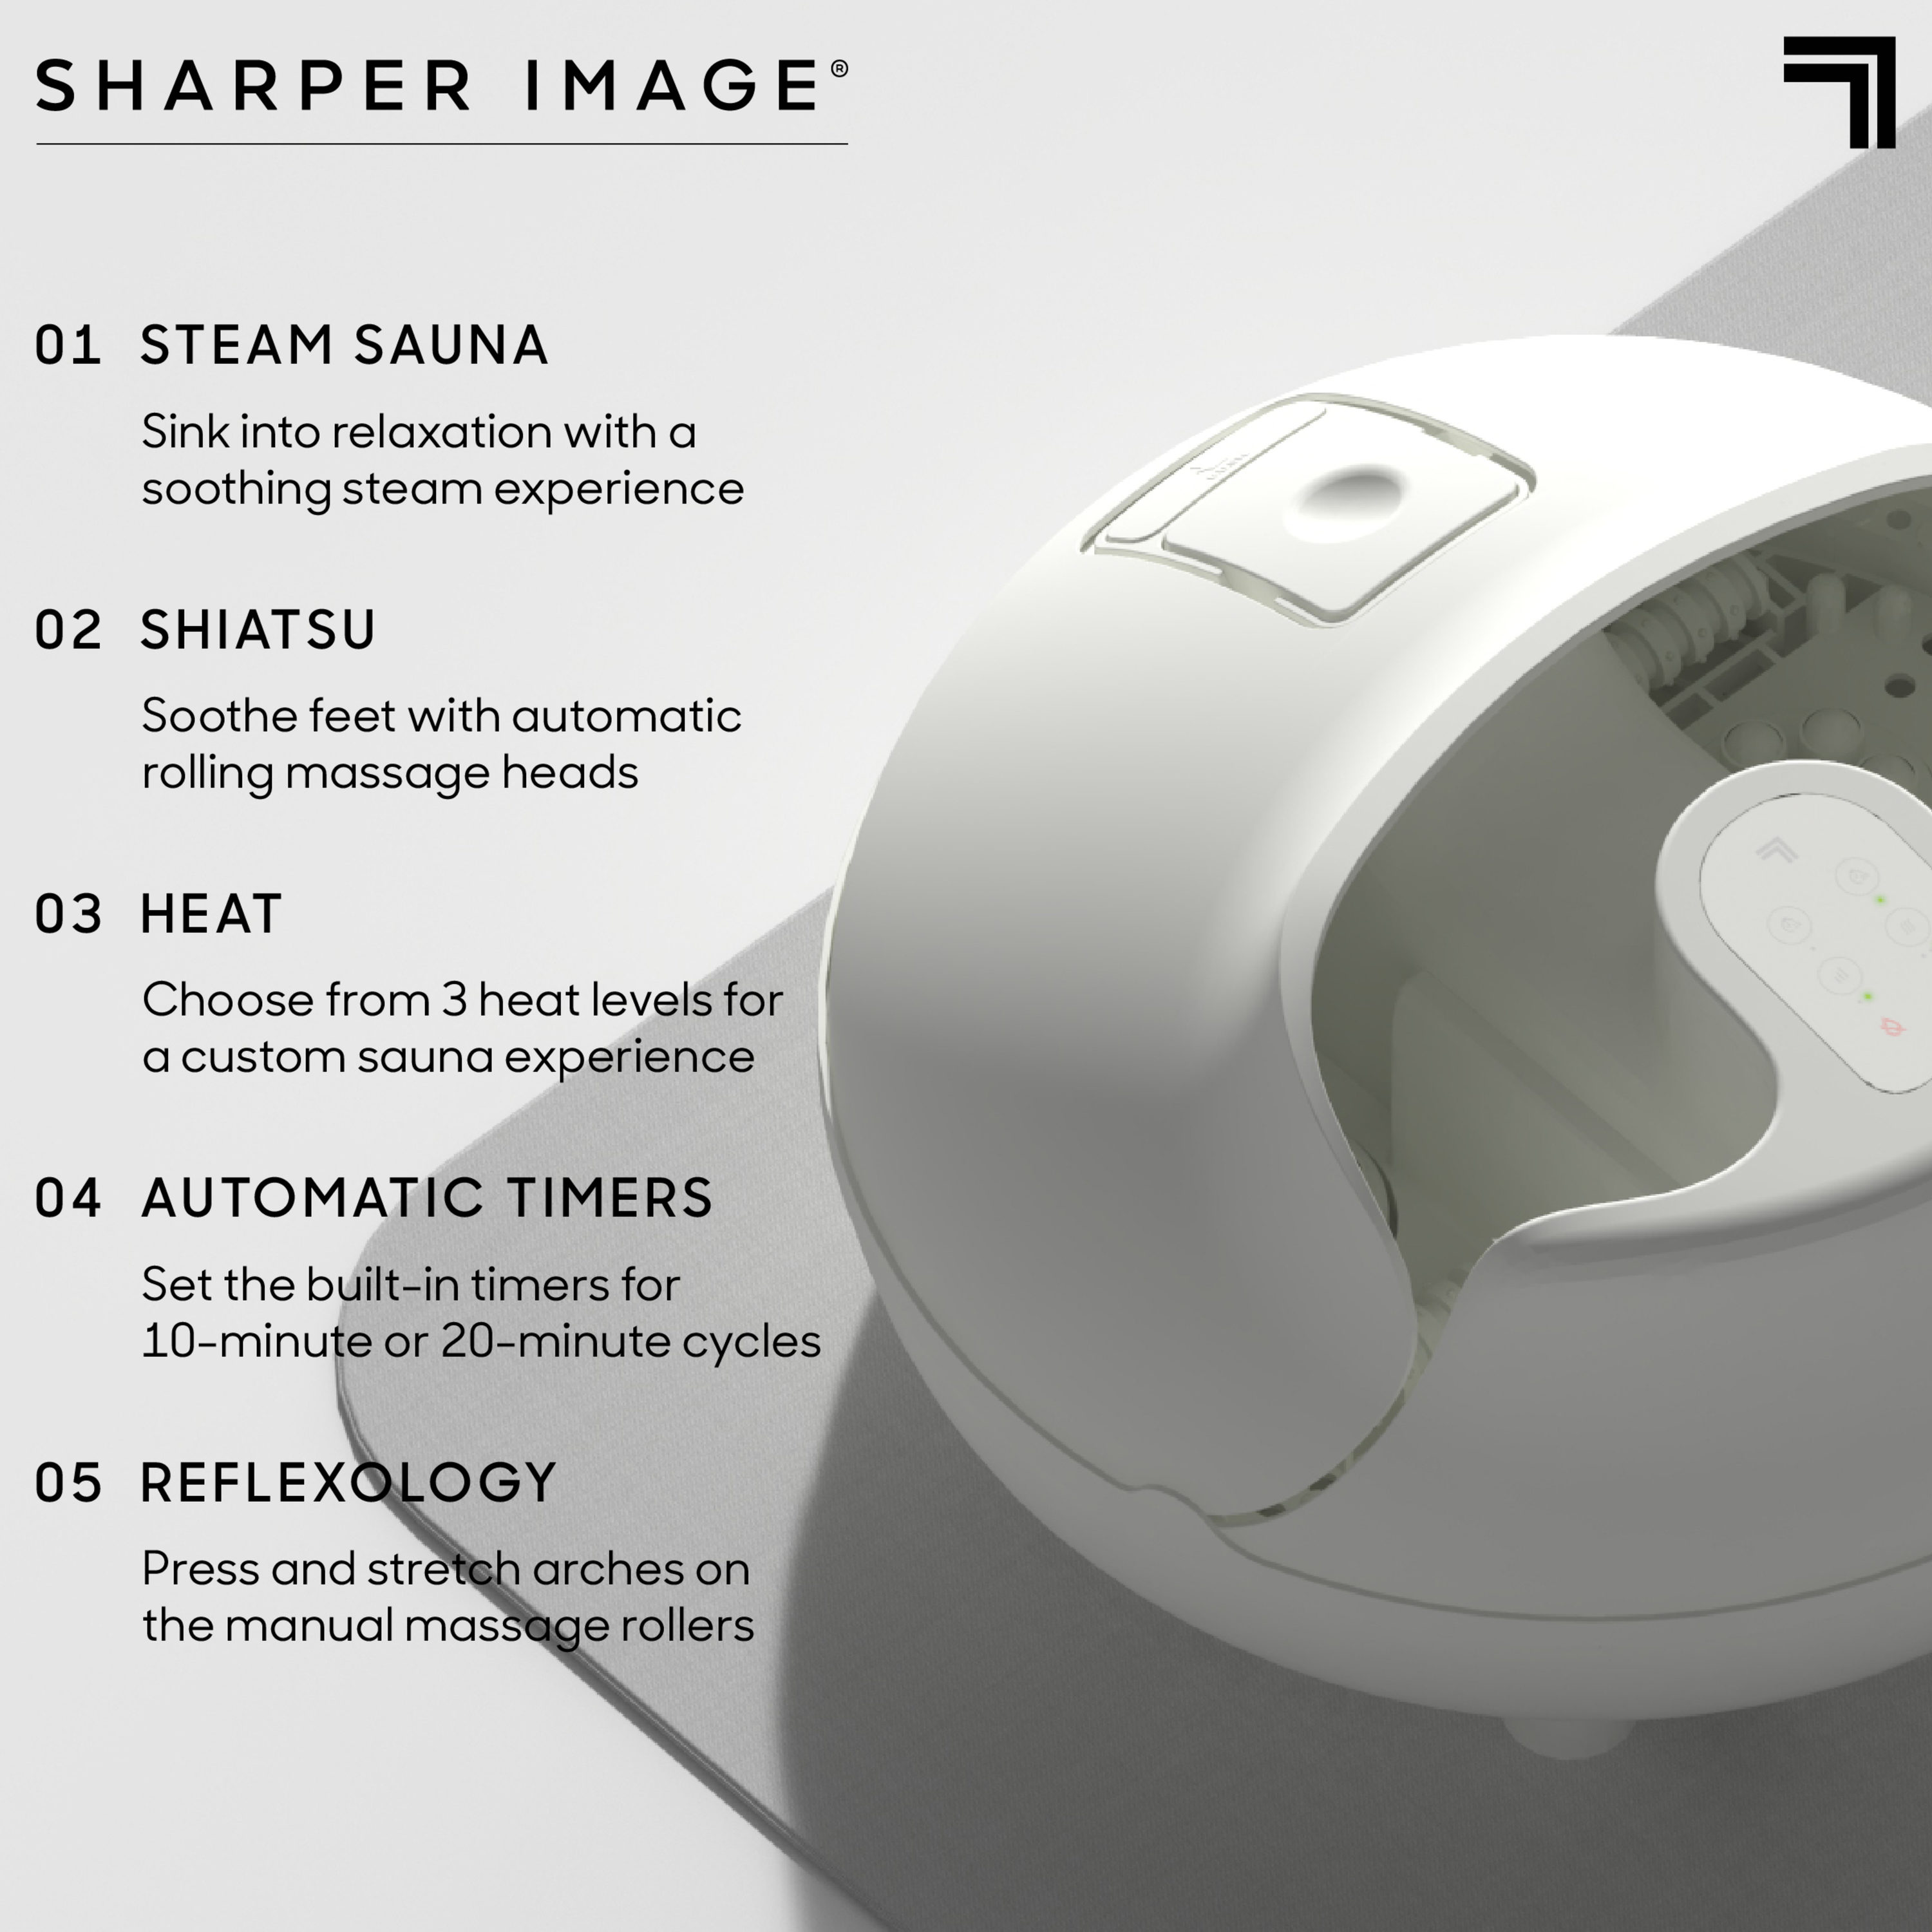 SHARPER IMAGE 1015793 Spastudio Digital Scale User Manual